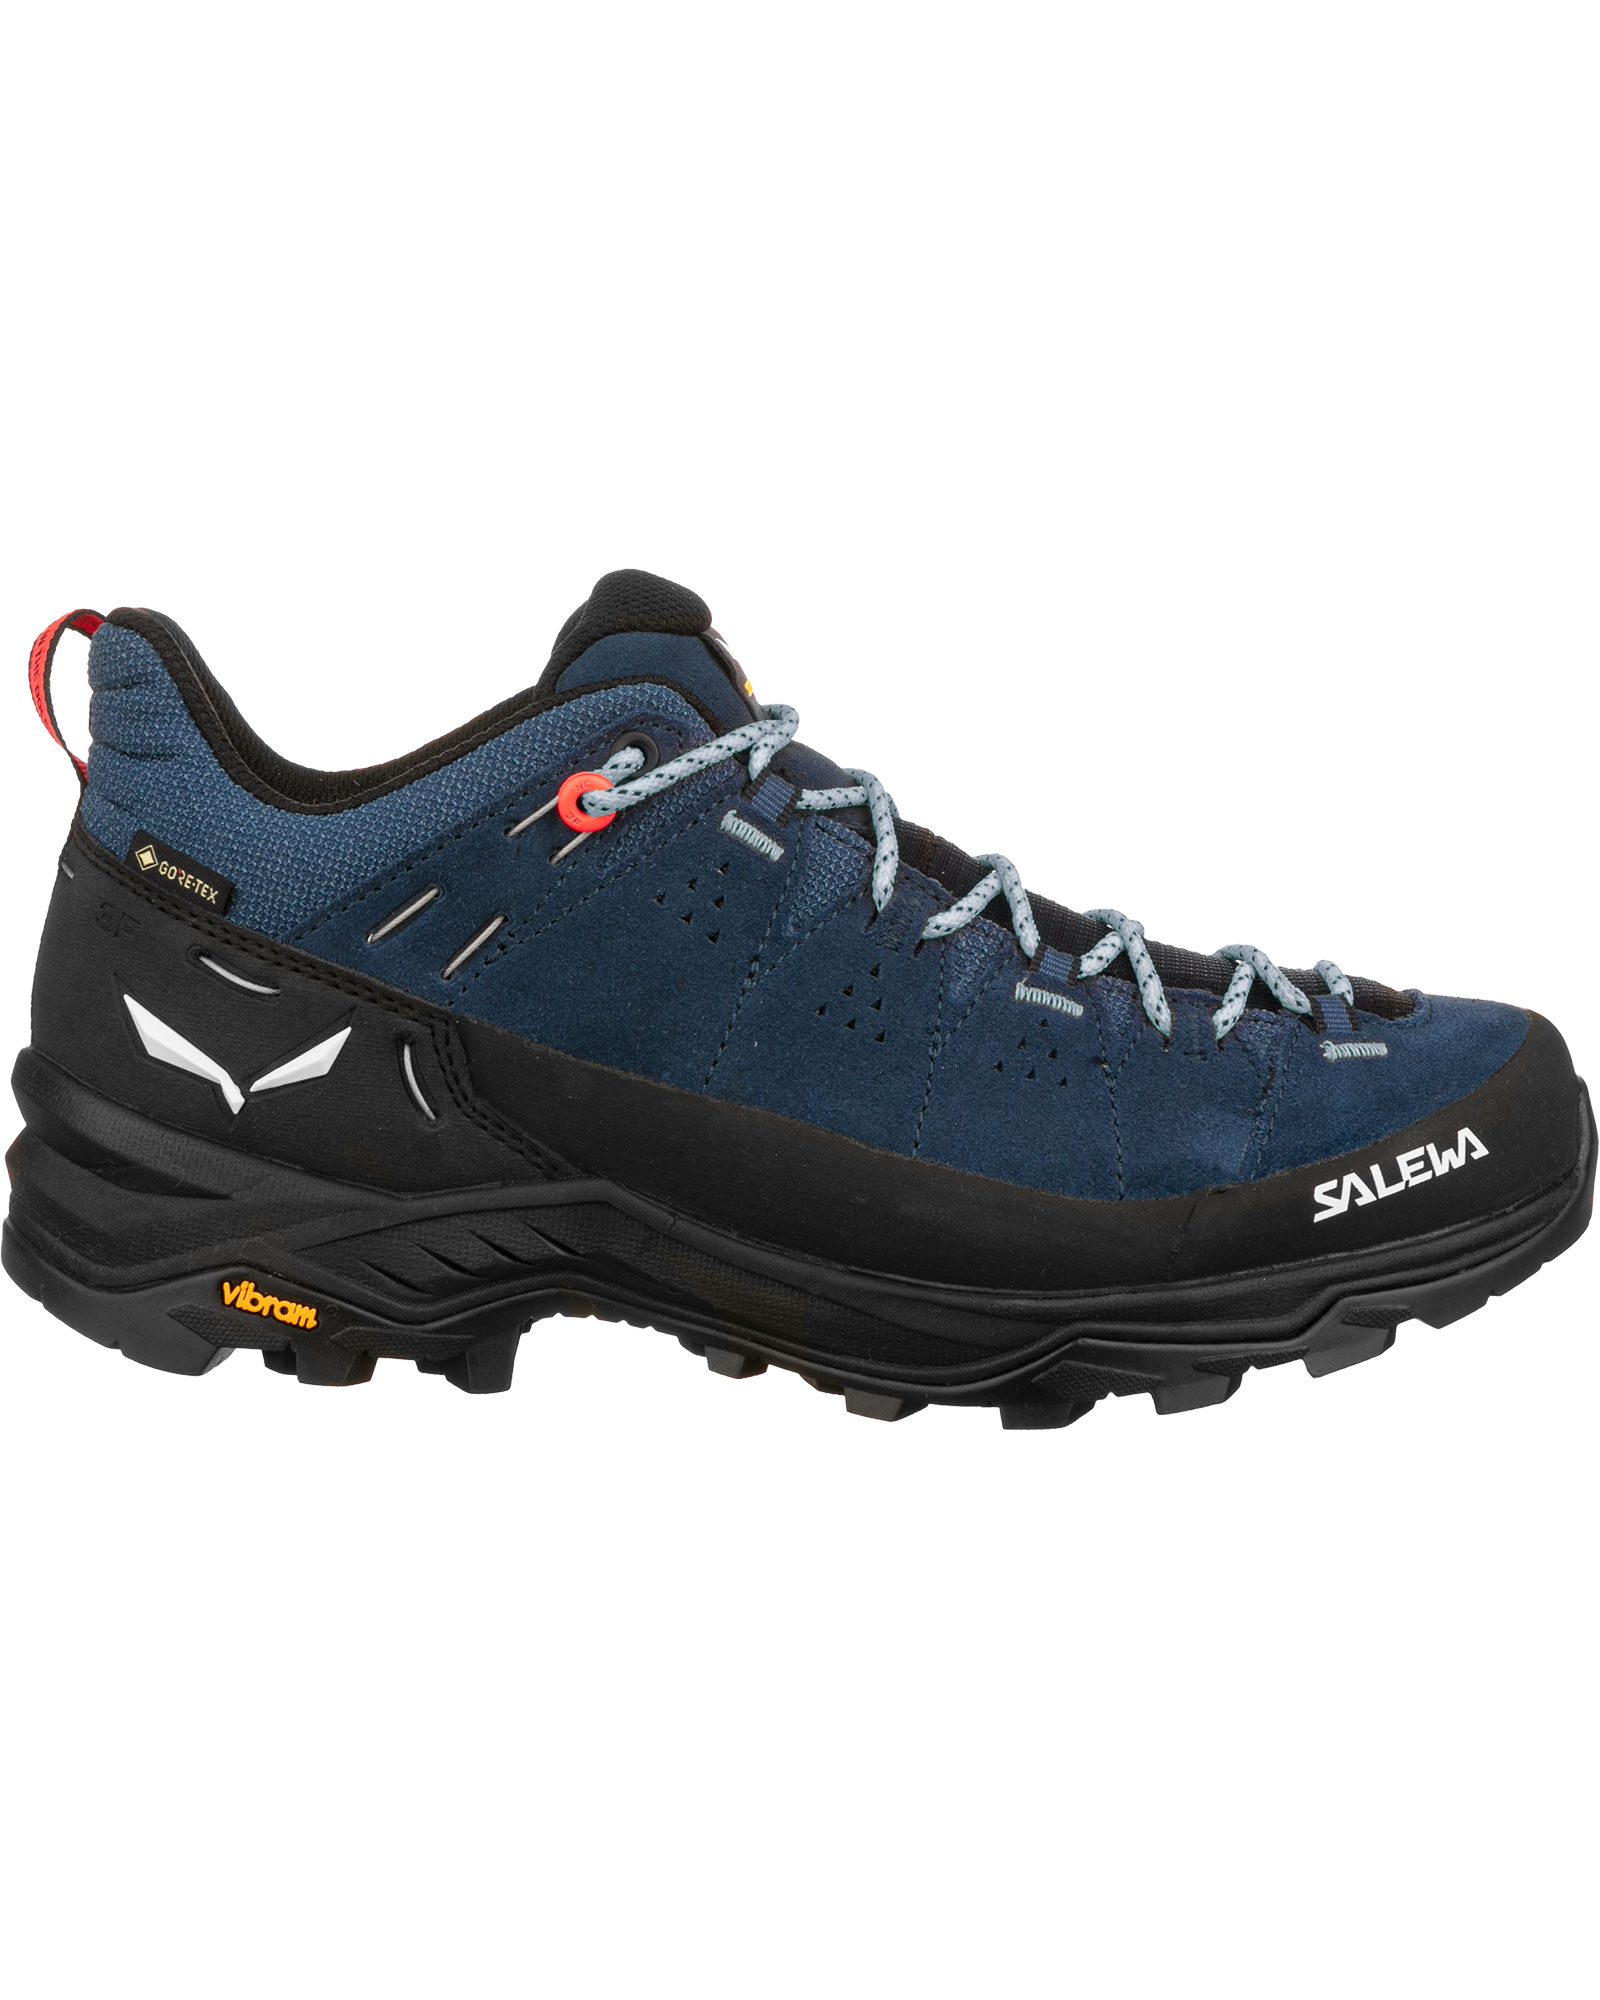 Salewa Alp Trainer 2 GORE TEX Women’s Shoes - Dark Denim UK 6.5